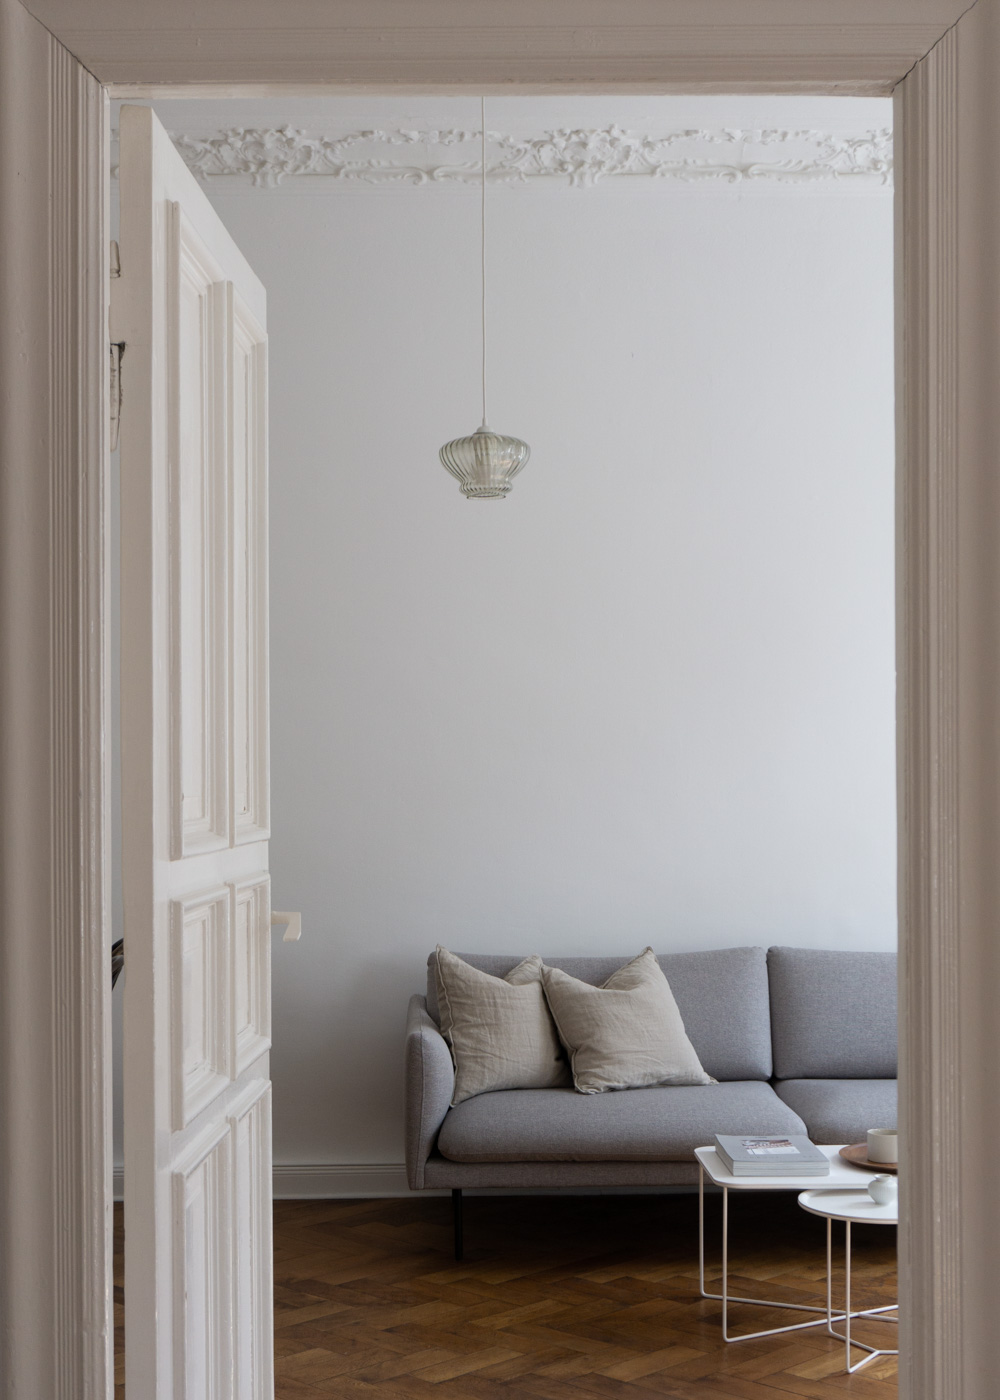 Grey Sofa | neutral interior, white and beige home, wood floors, minimalist simple decor, natural berlin apartment, Scandinavian design, calm aesthetic